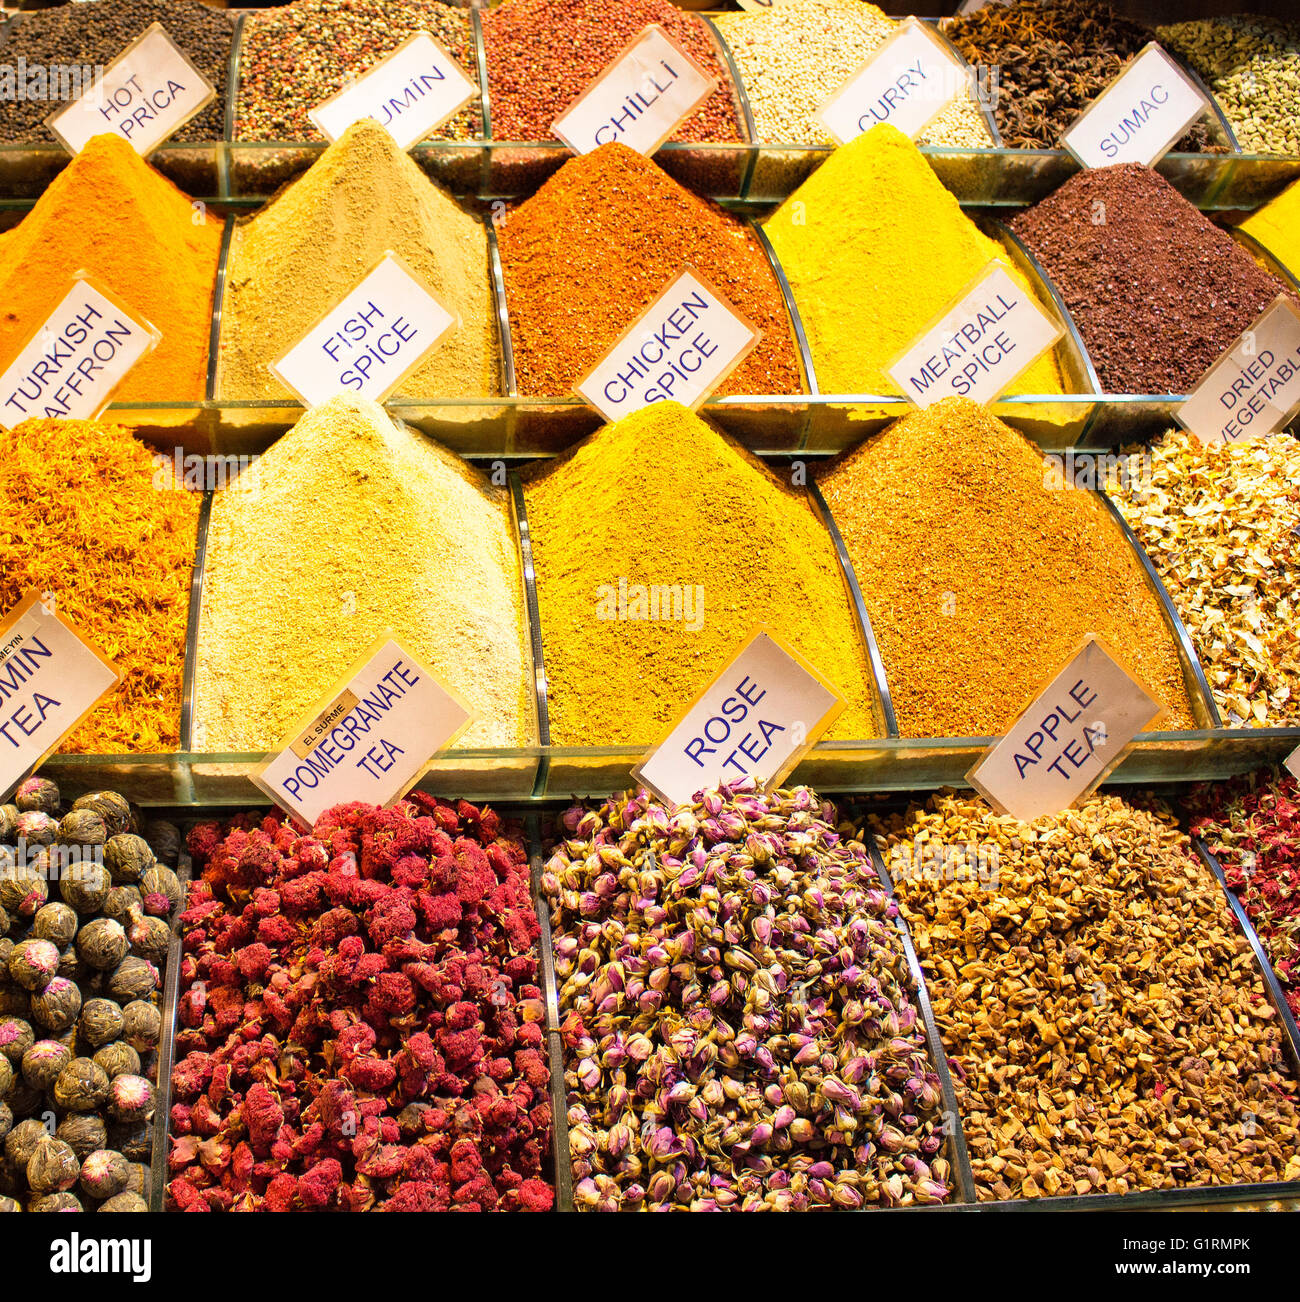 Spice market in Eminonu/Istanbul Stock Photo